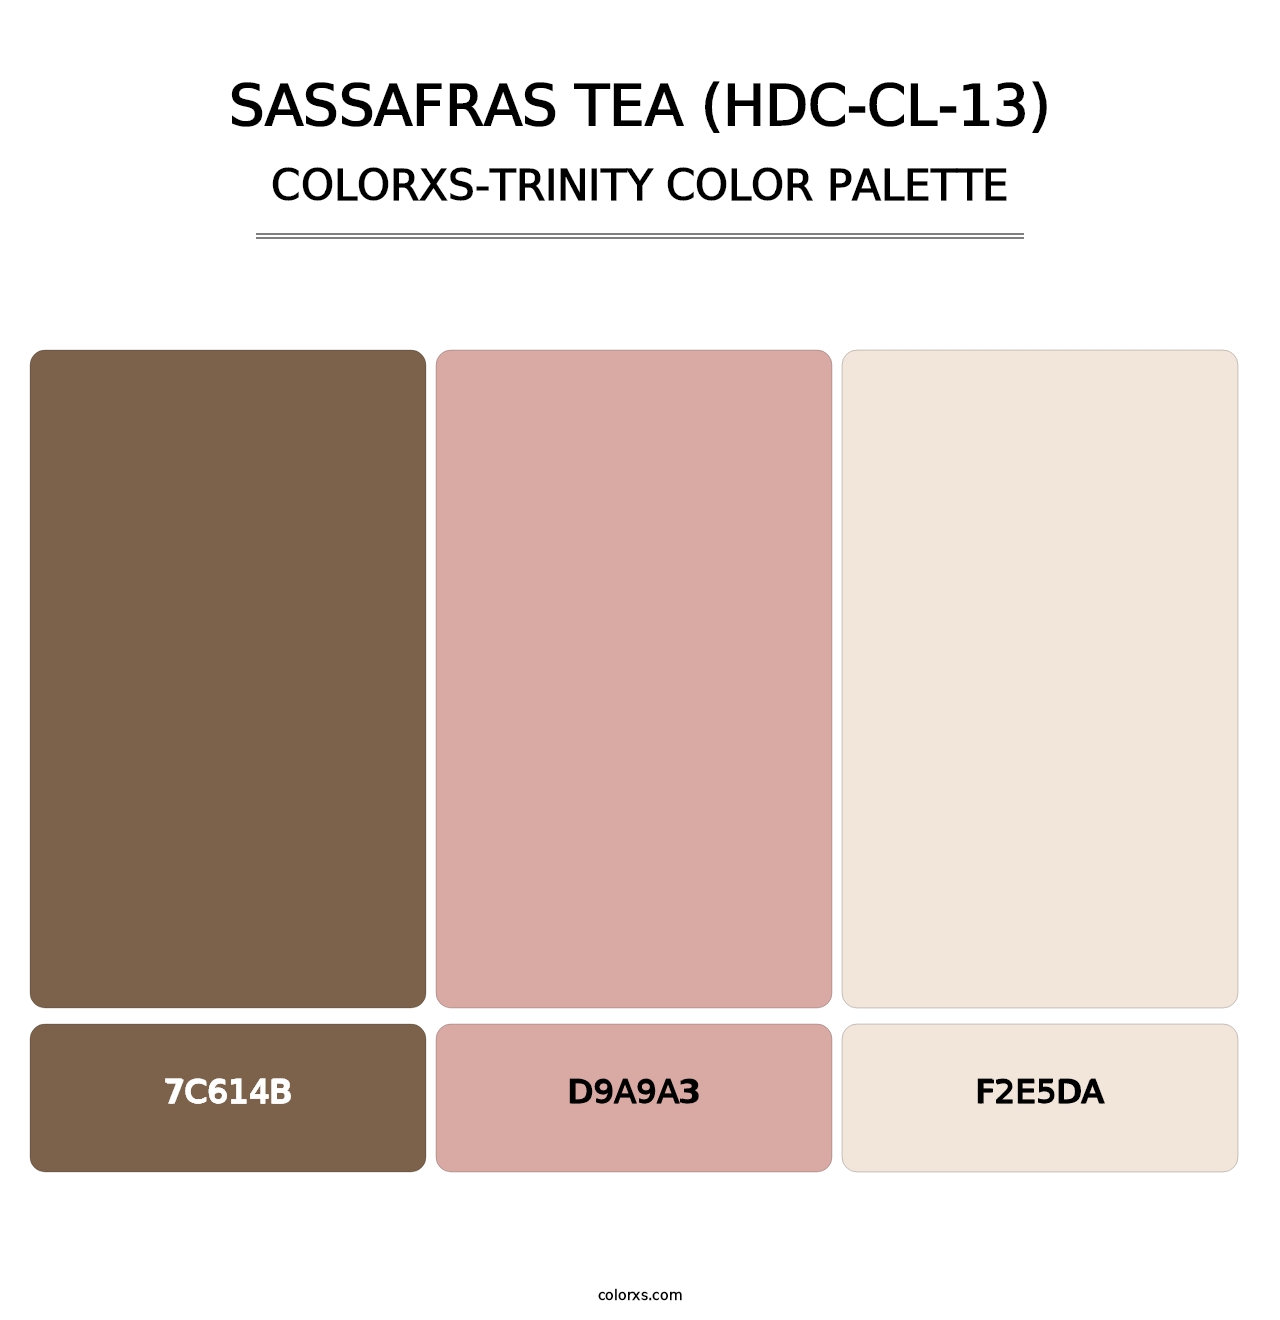 Sassafras Tea (HDC-CL-13) - Colorxs Trinity Palette